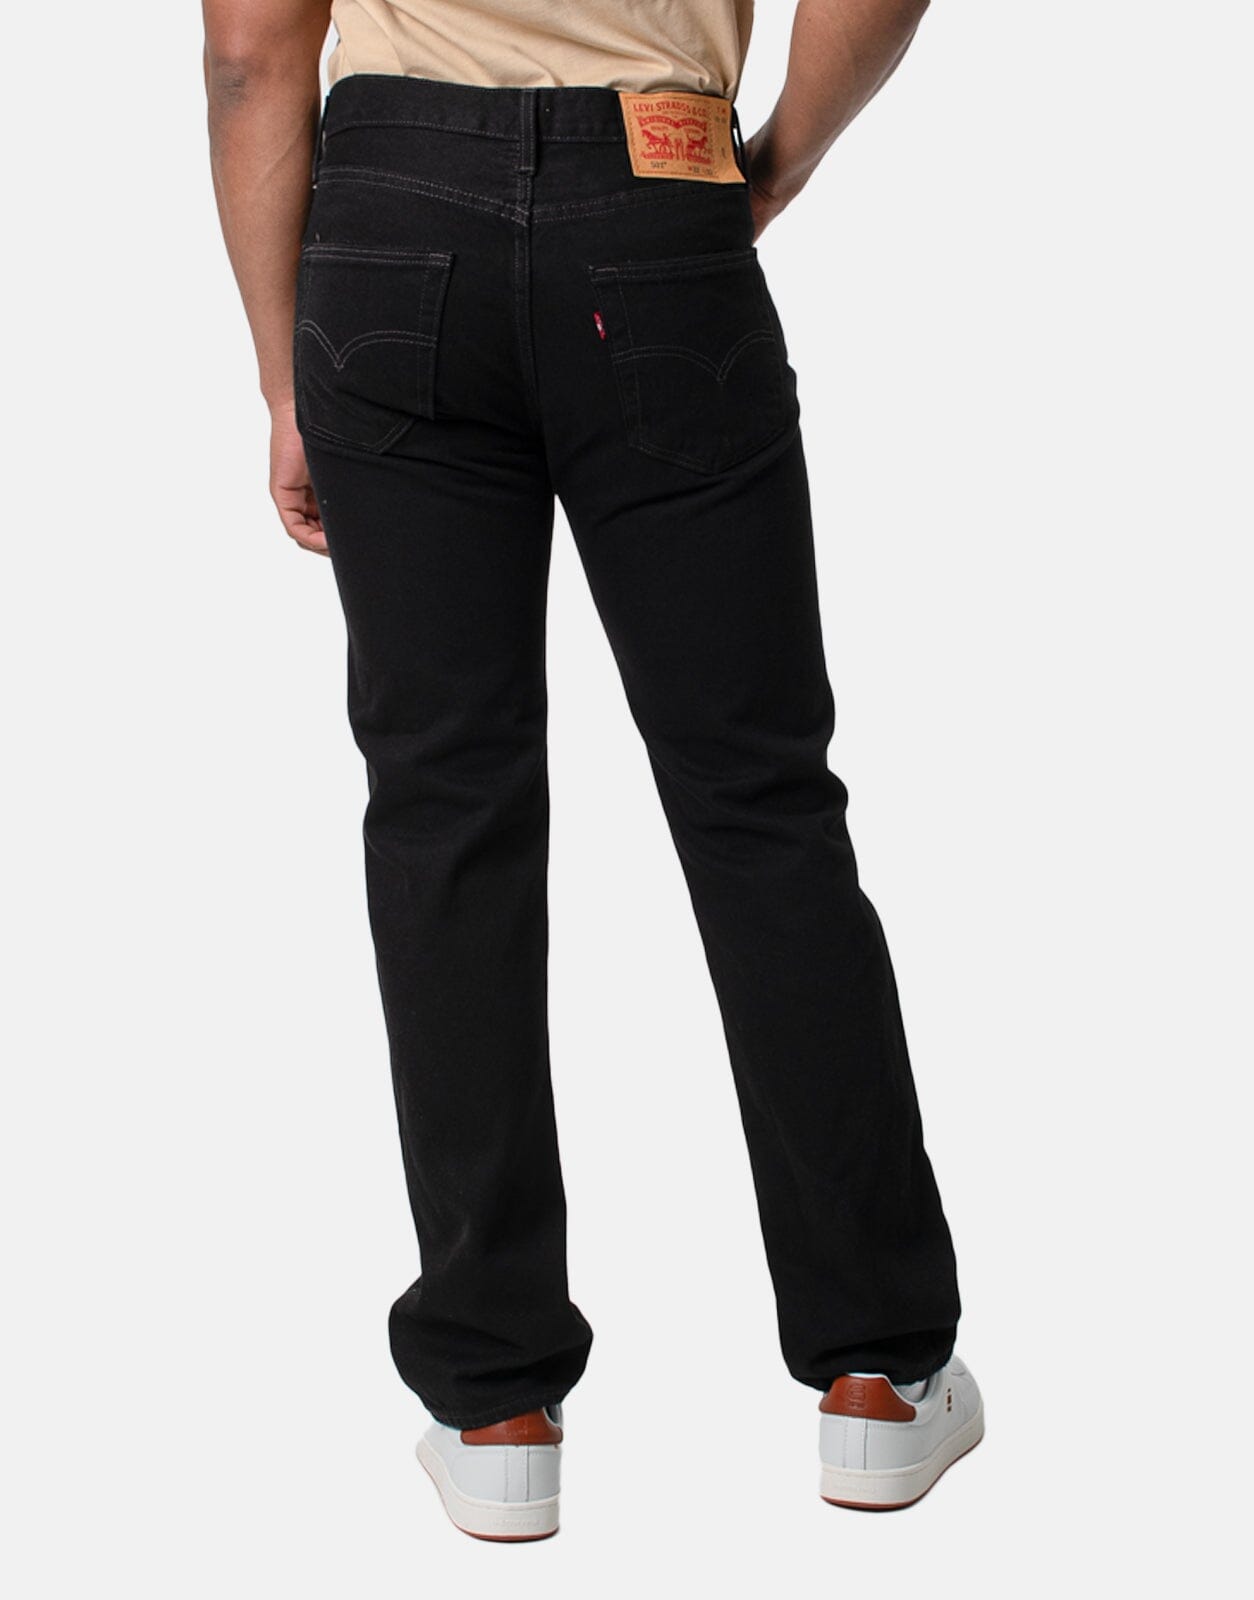 Levi's 501 Original Black Jeans - Subwear